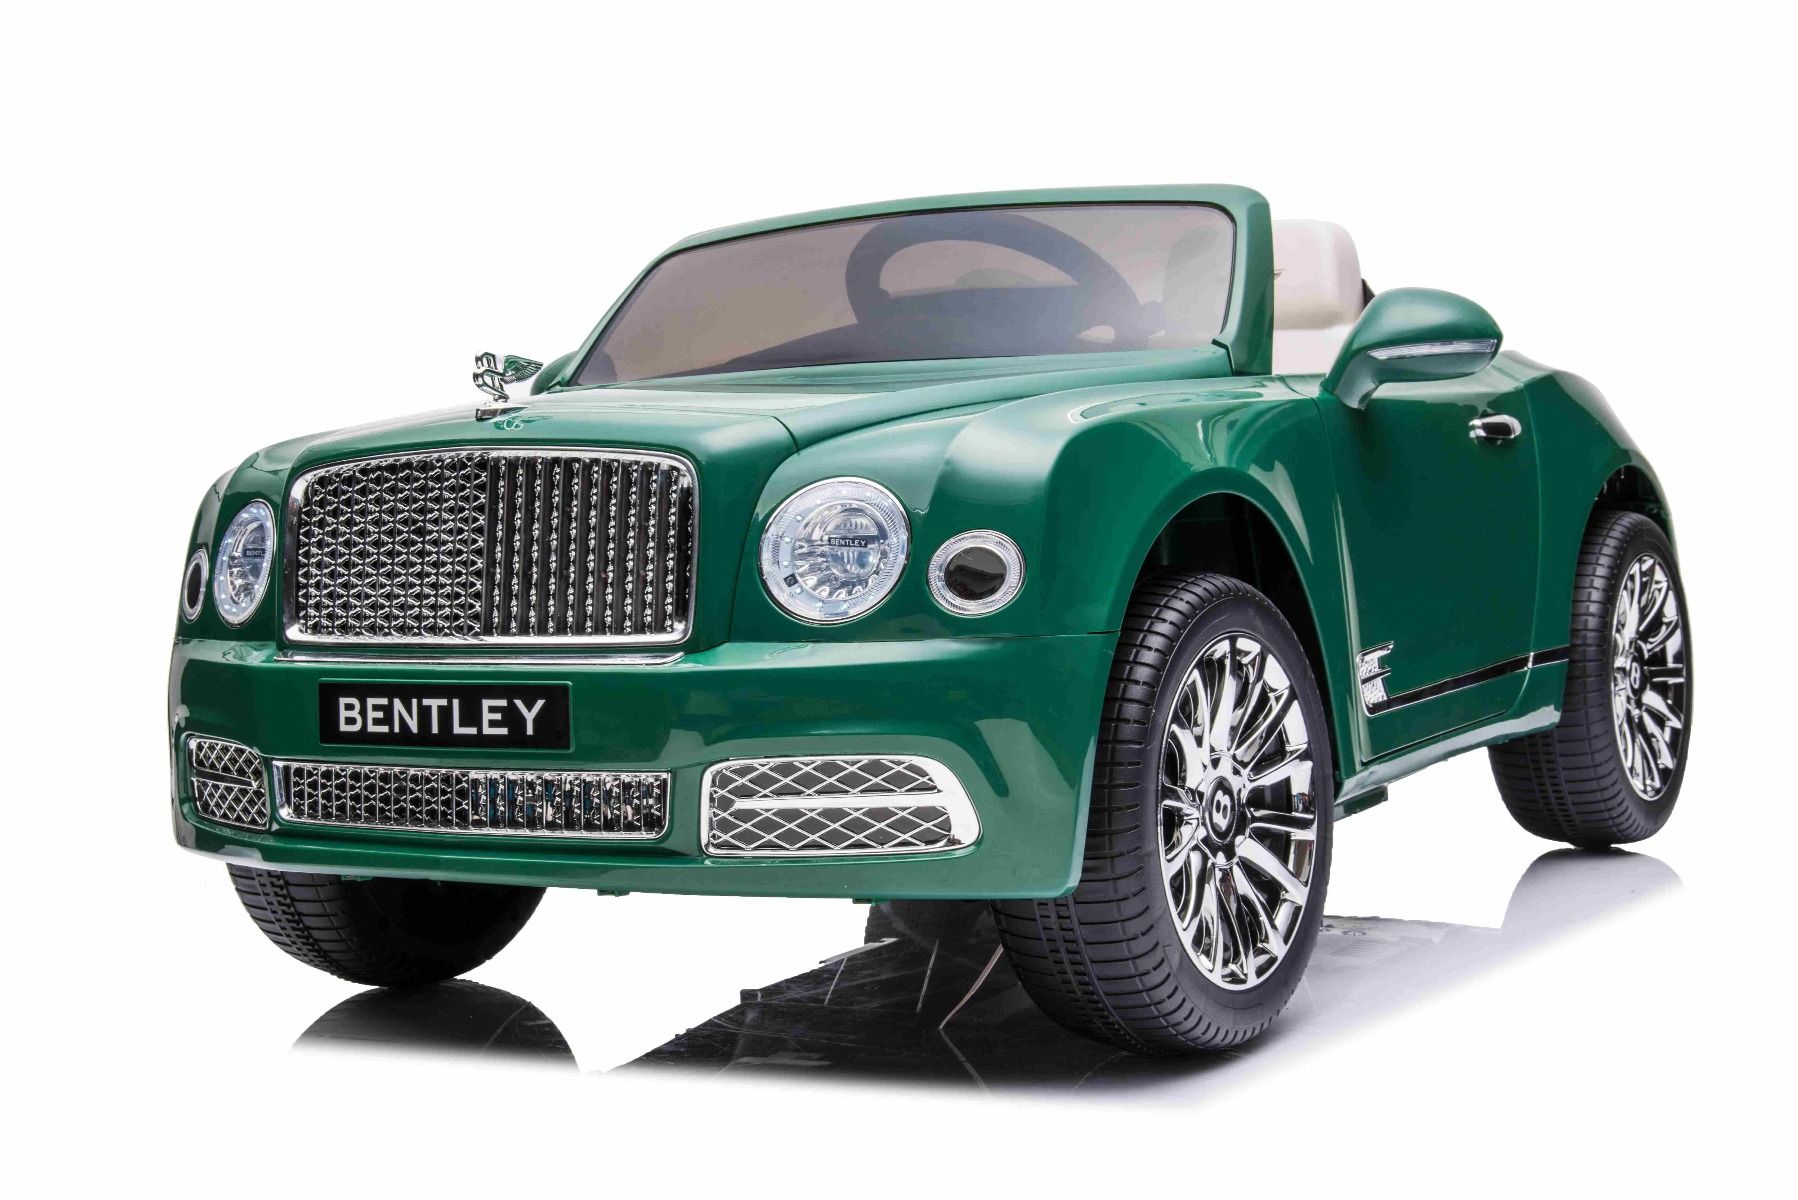 Electric ride-on car Bentley Mulsanne 12V, green, Leatherette seat, 2.4 GHz  remote control, Eva wheels, USB / Aux Input, Suspension, 12V / 7Ah battery,  LED Lights, Soft EVA wheels, 2 X 35W